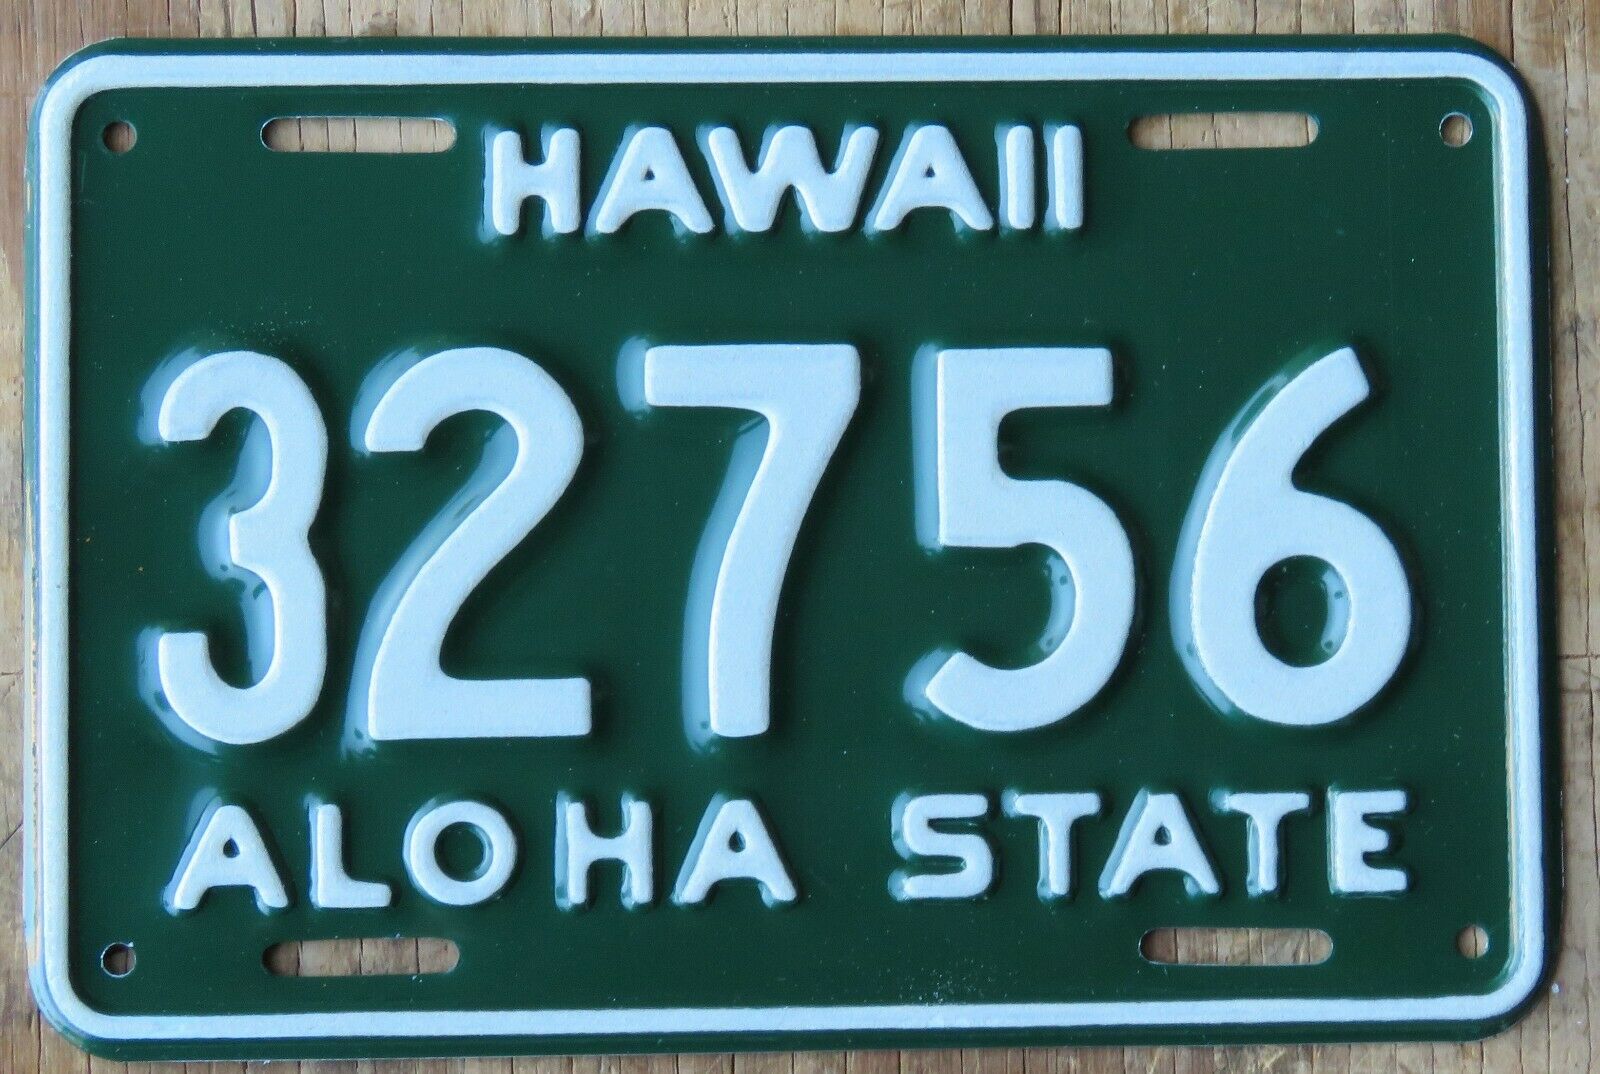 Hawaii Aloha State Motorcycle License Plate 1961   32756